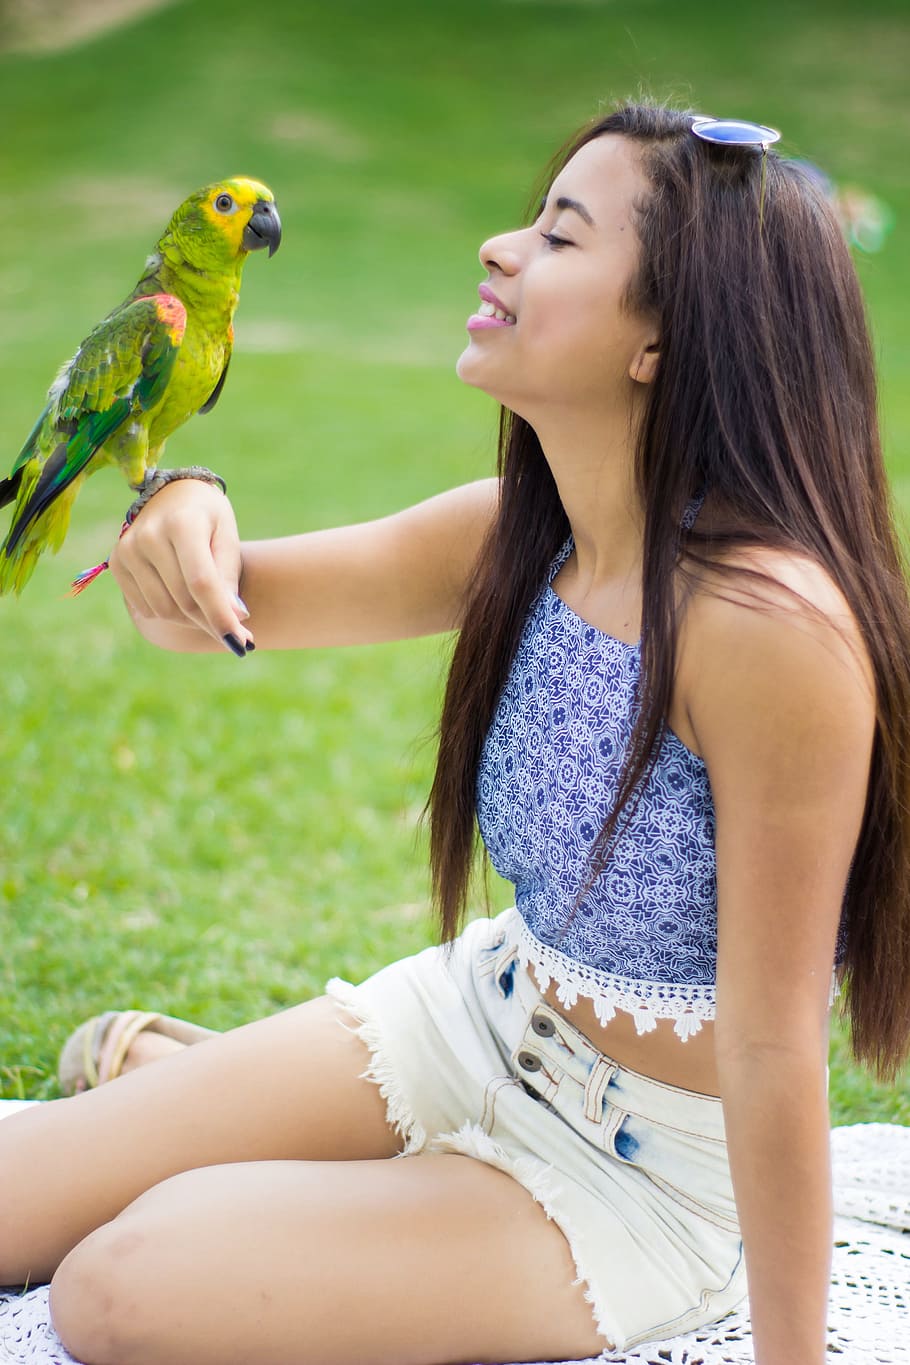 green, yellow, parrot, woman hand, girl, animal, joke, colorful, kite, happy